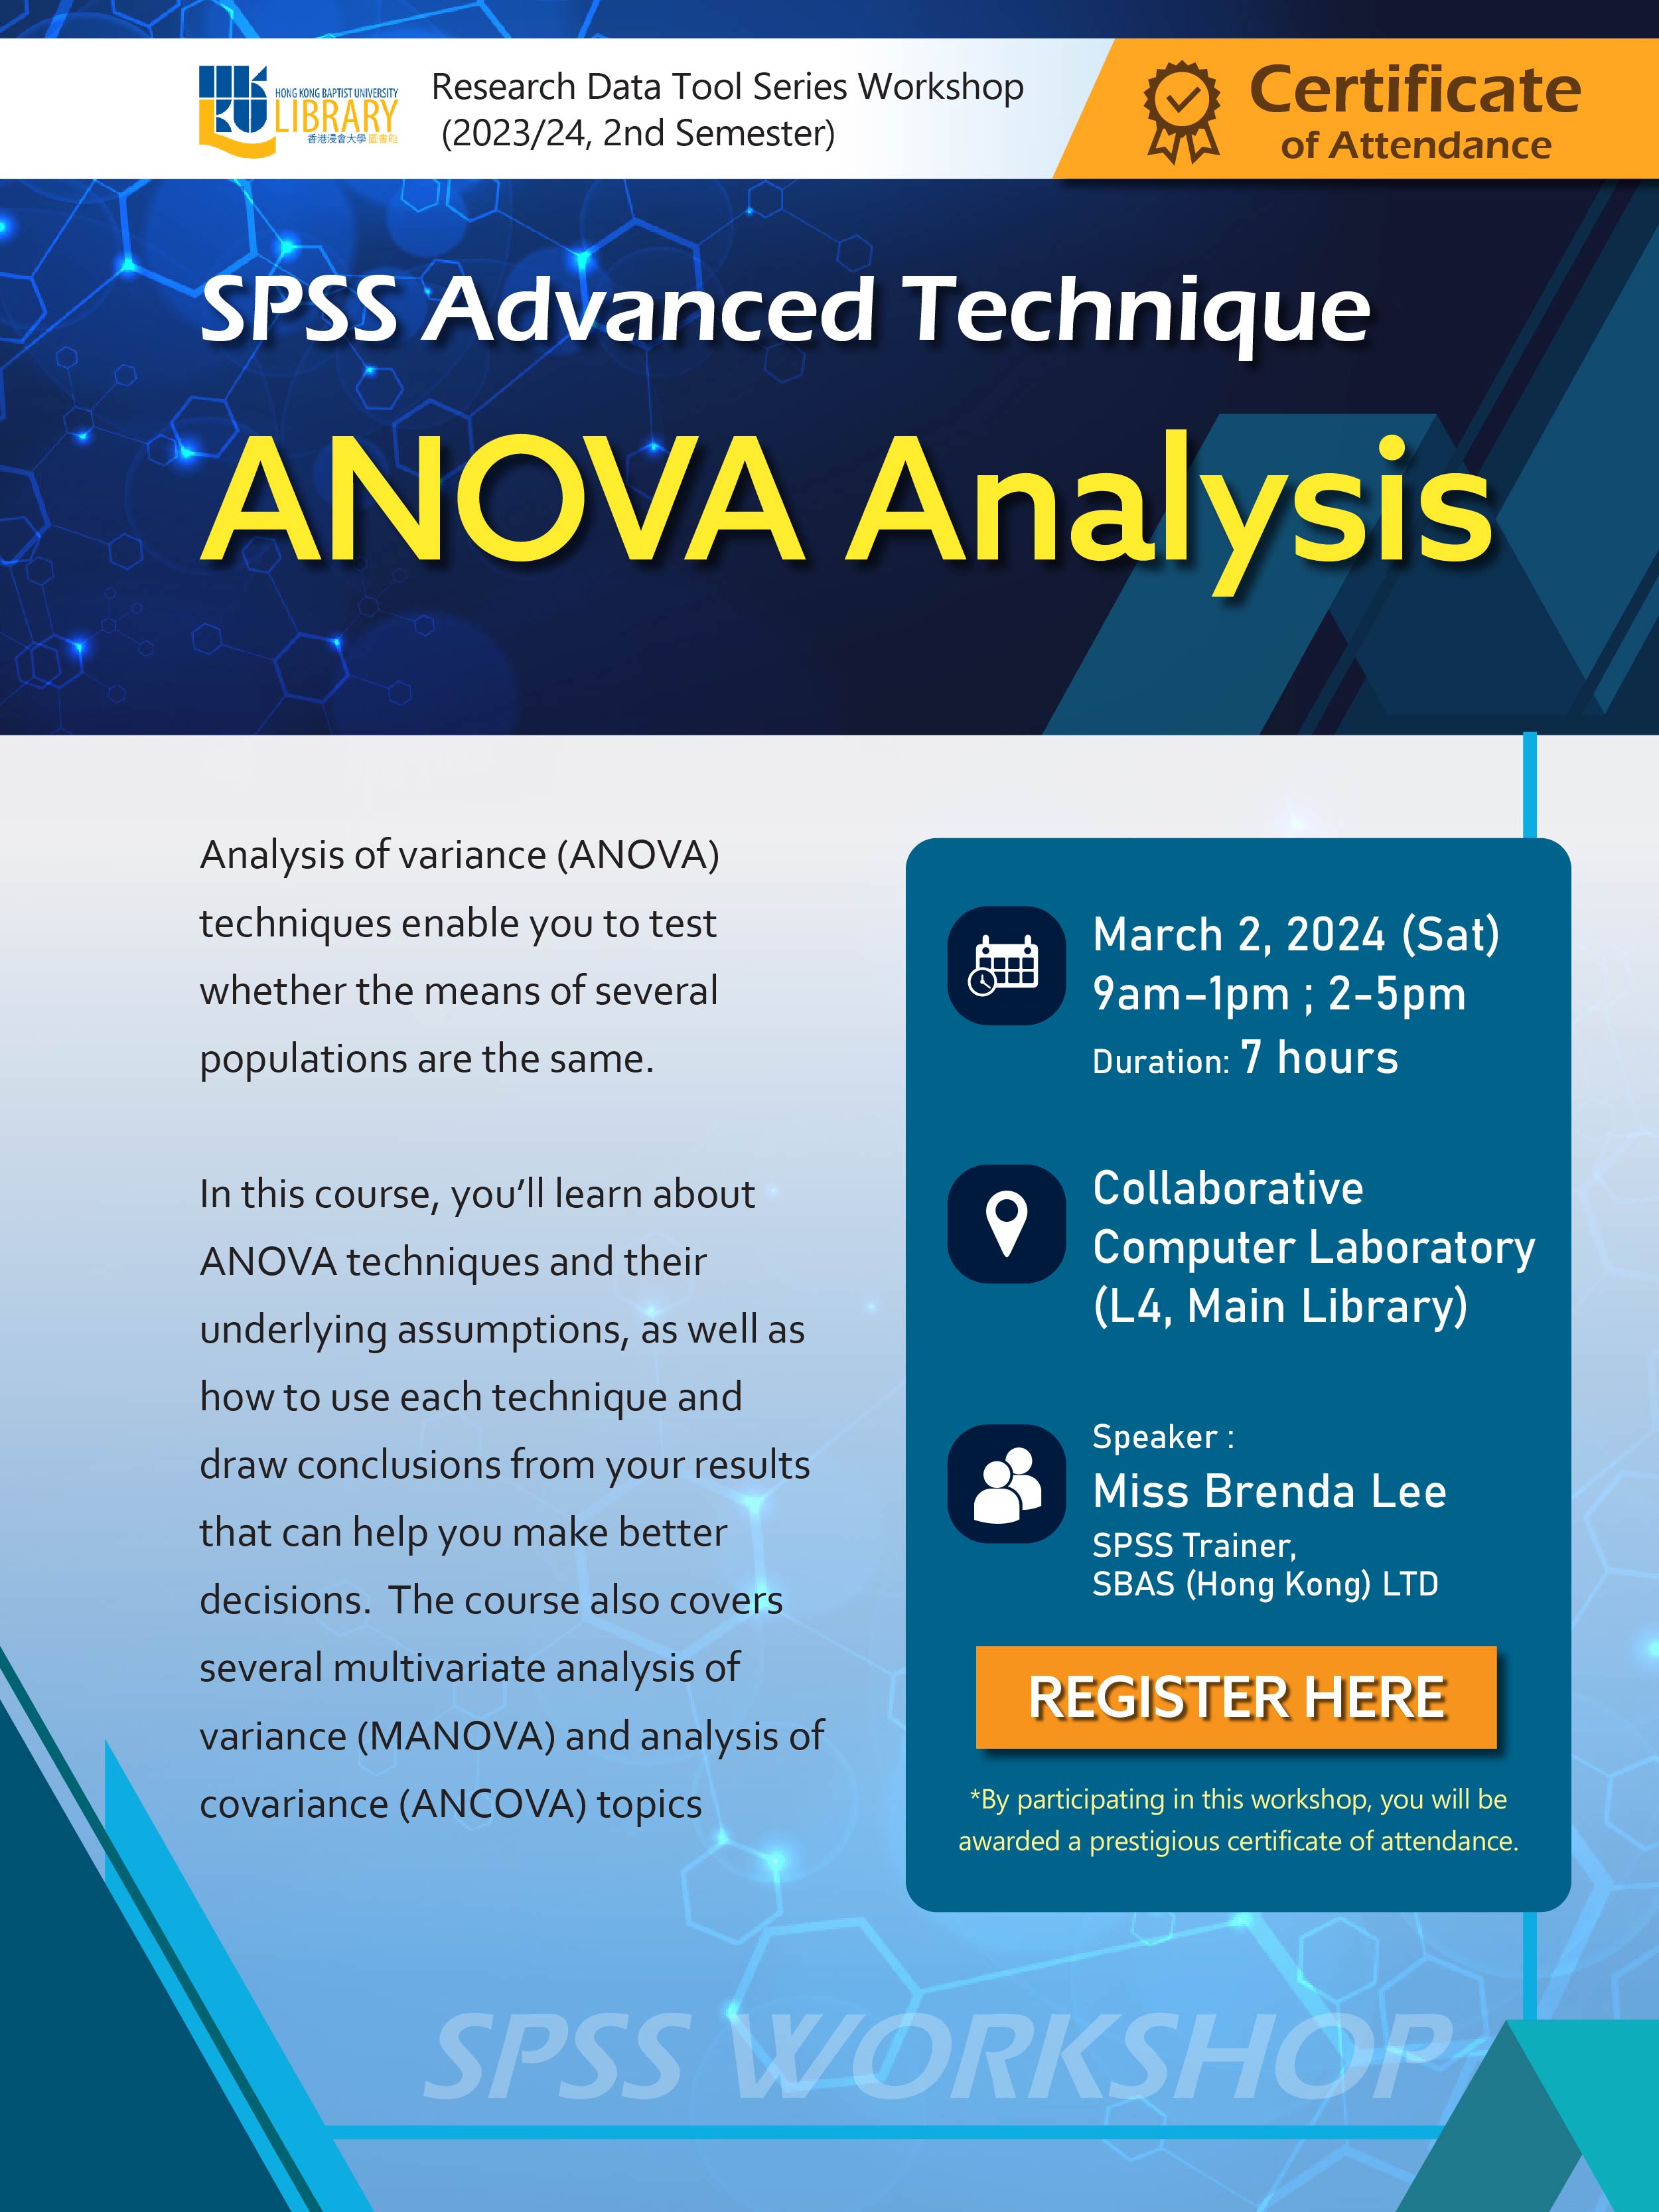 SPSS Advanced Technique: ANOVA Analysis